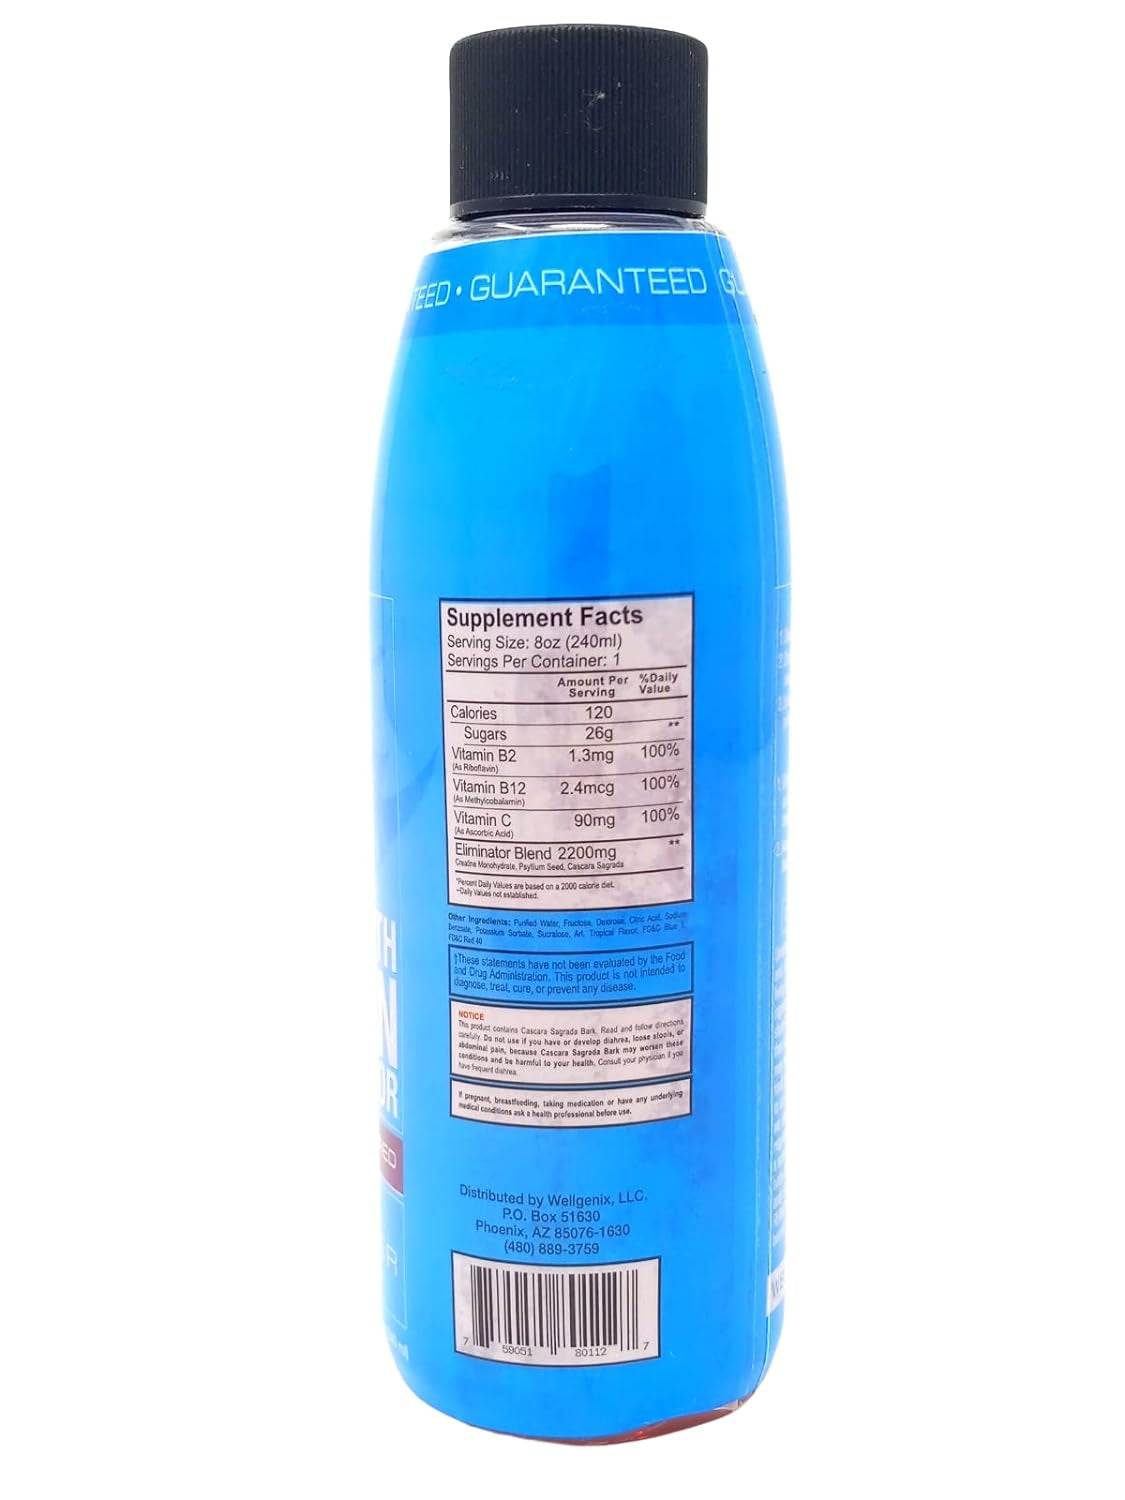 Wellgenix Omni Rhino Detox Drink - Toxin Eliminator - Same Day Cleansing Liquid - Fruit Punch - 8 Fl Oz (Pack of 1)